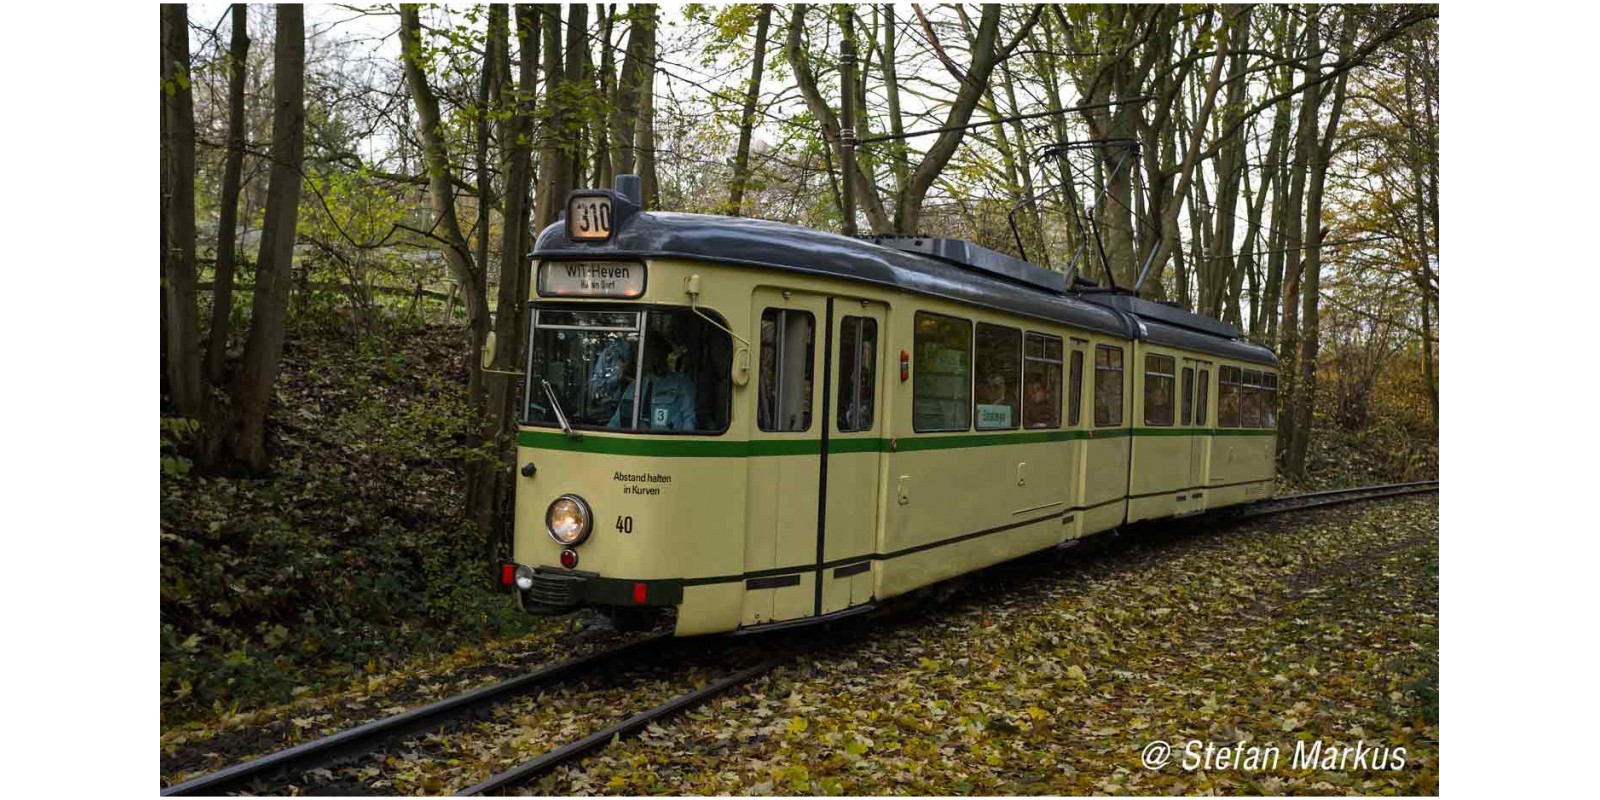 RI2860 Tram, DUEWAG GT6, BOGESTRA, beige livery, period IV